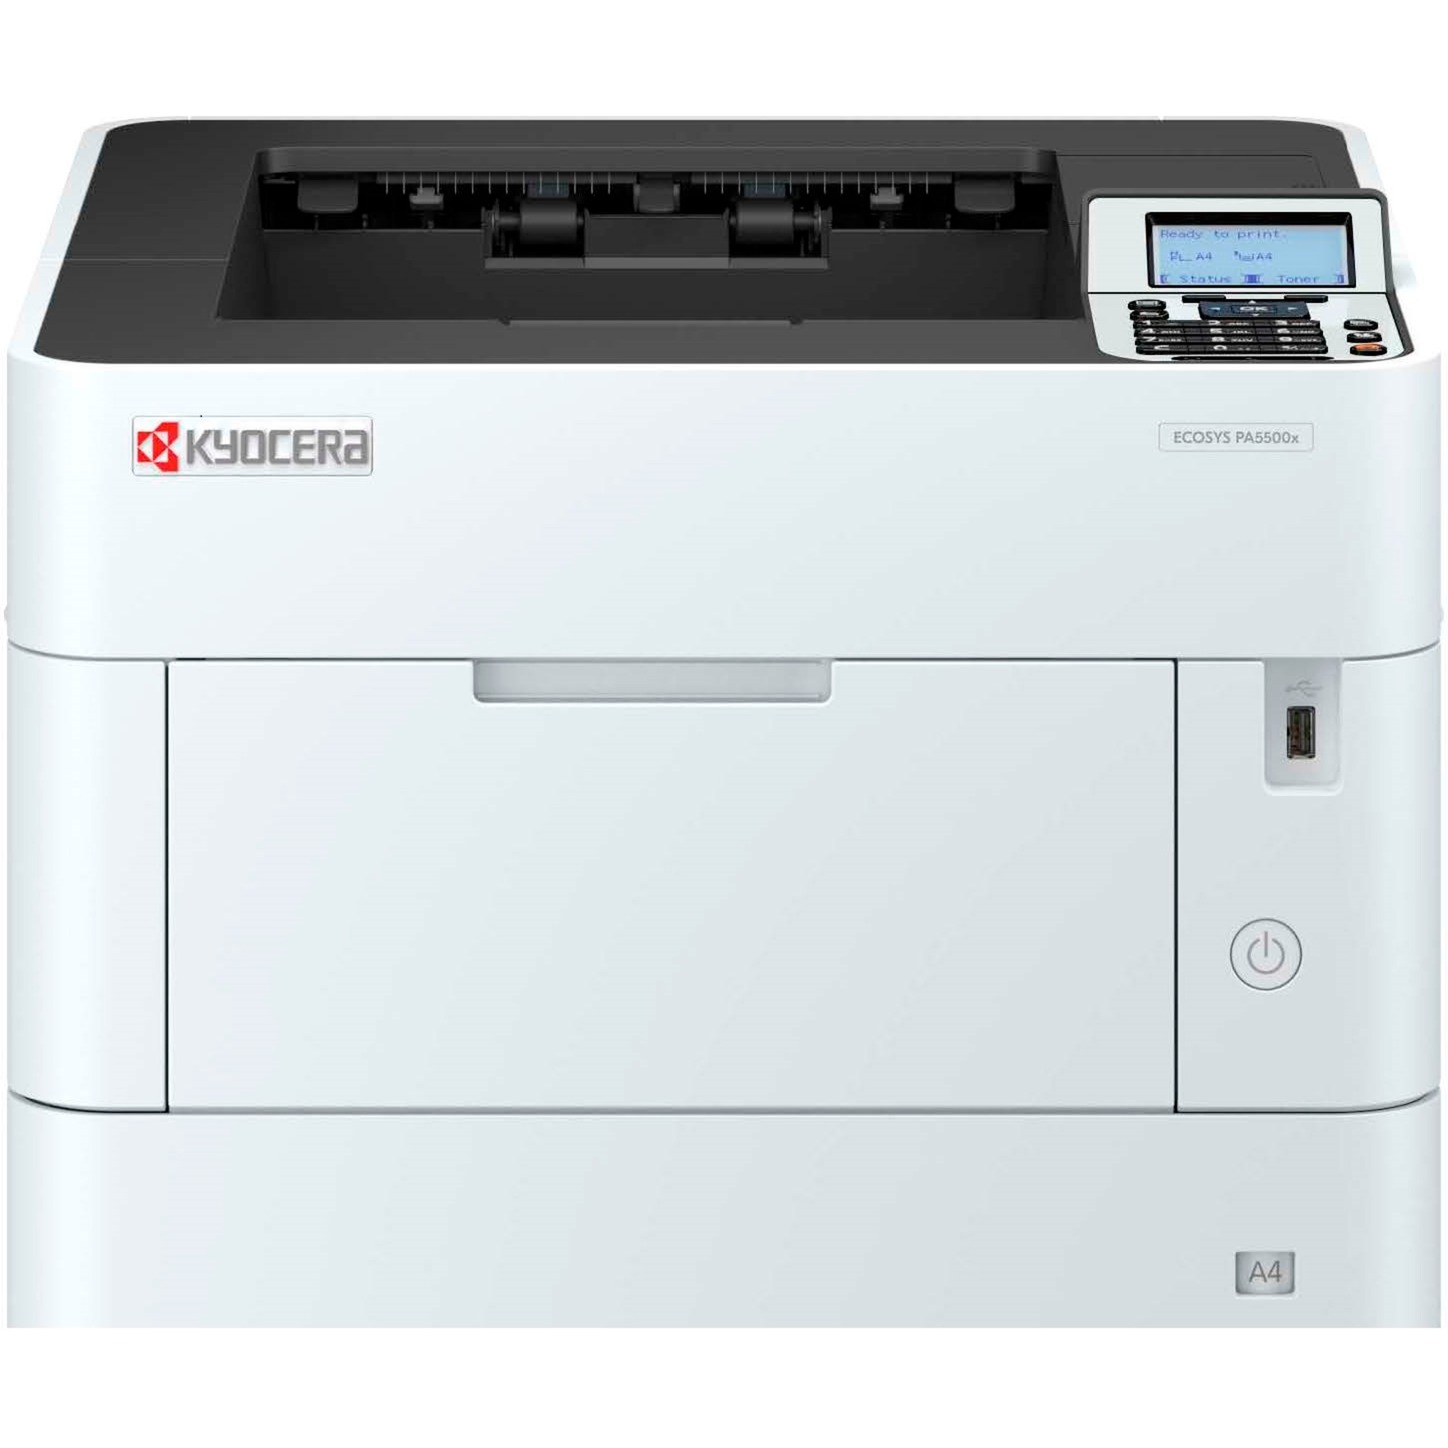 ECOSYS PA5000x (inkl. 3 Jahre Kyocera Life Plus), Laserdrucker von Kyocera